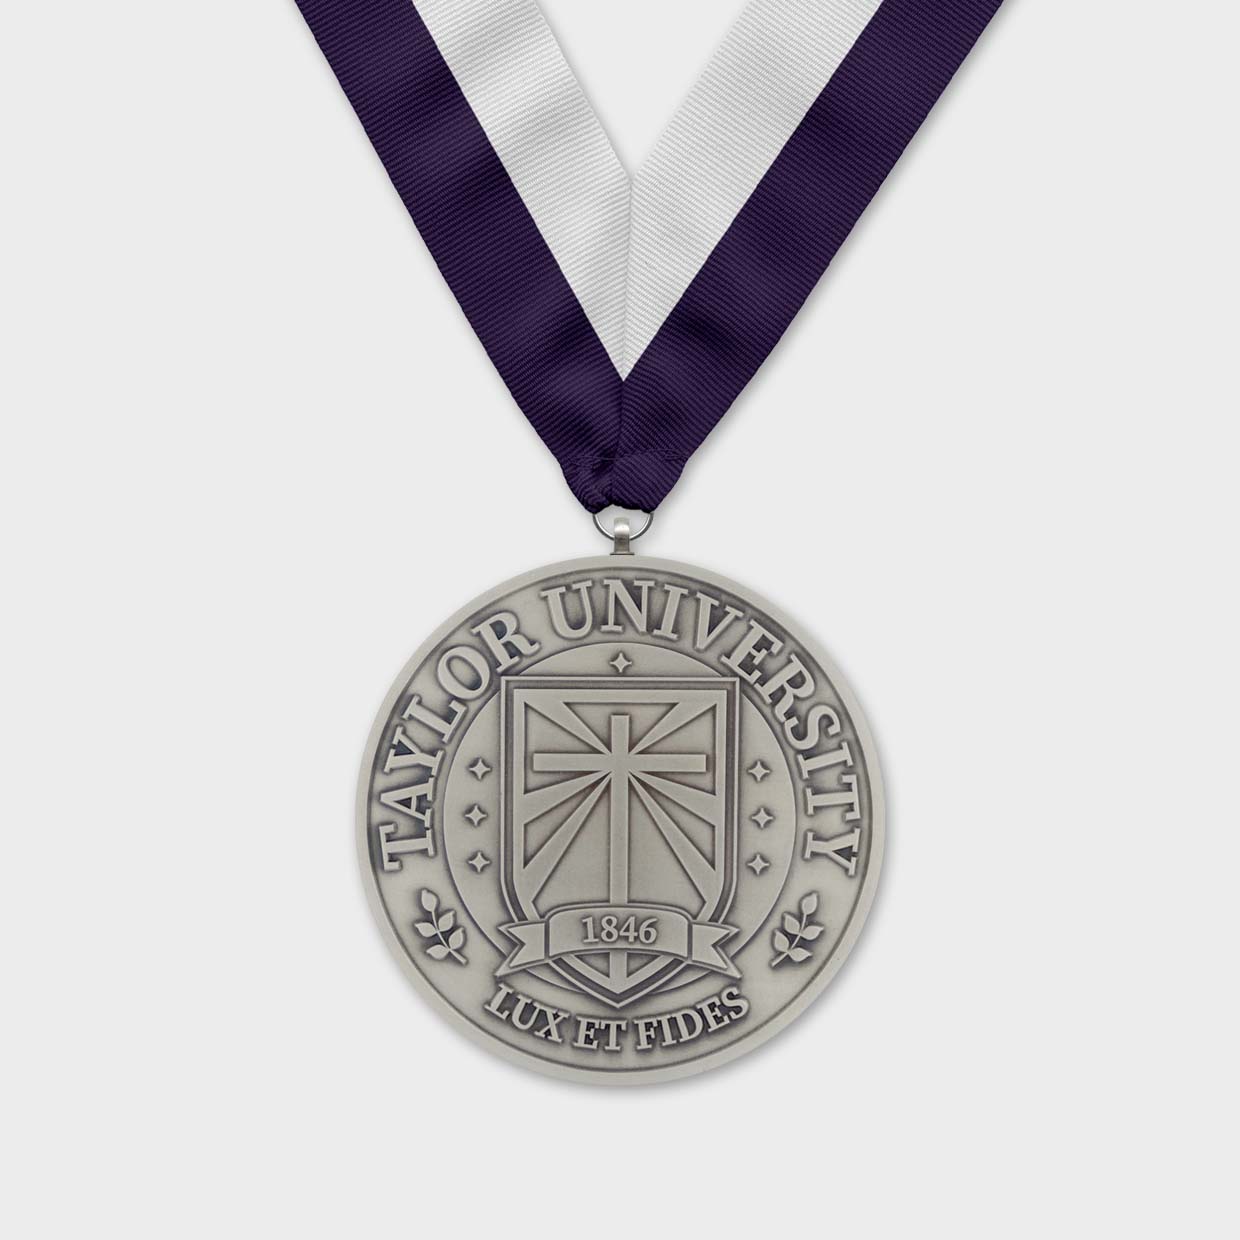 Taylor University Medal Ribbon